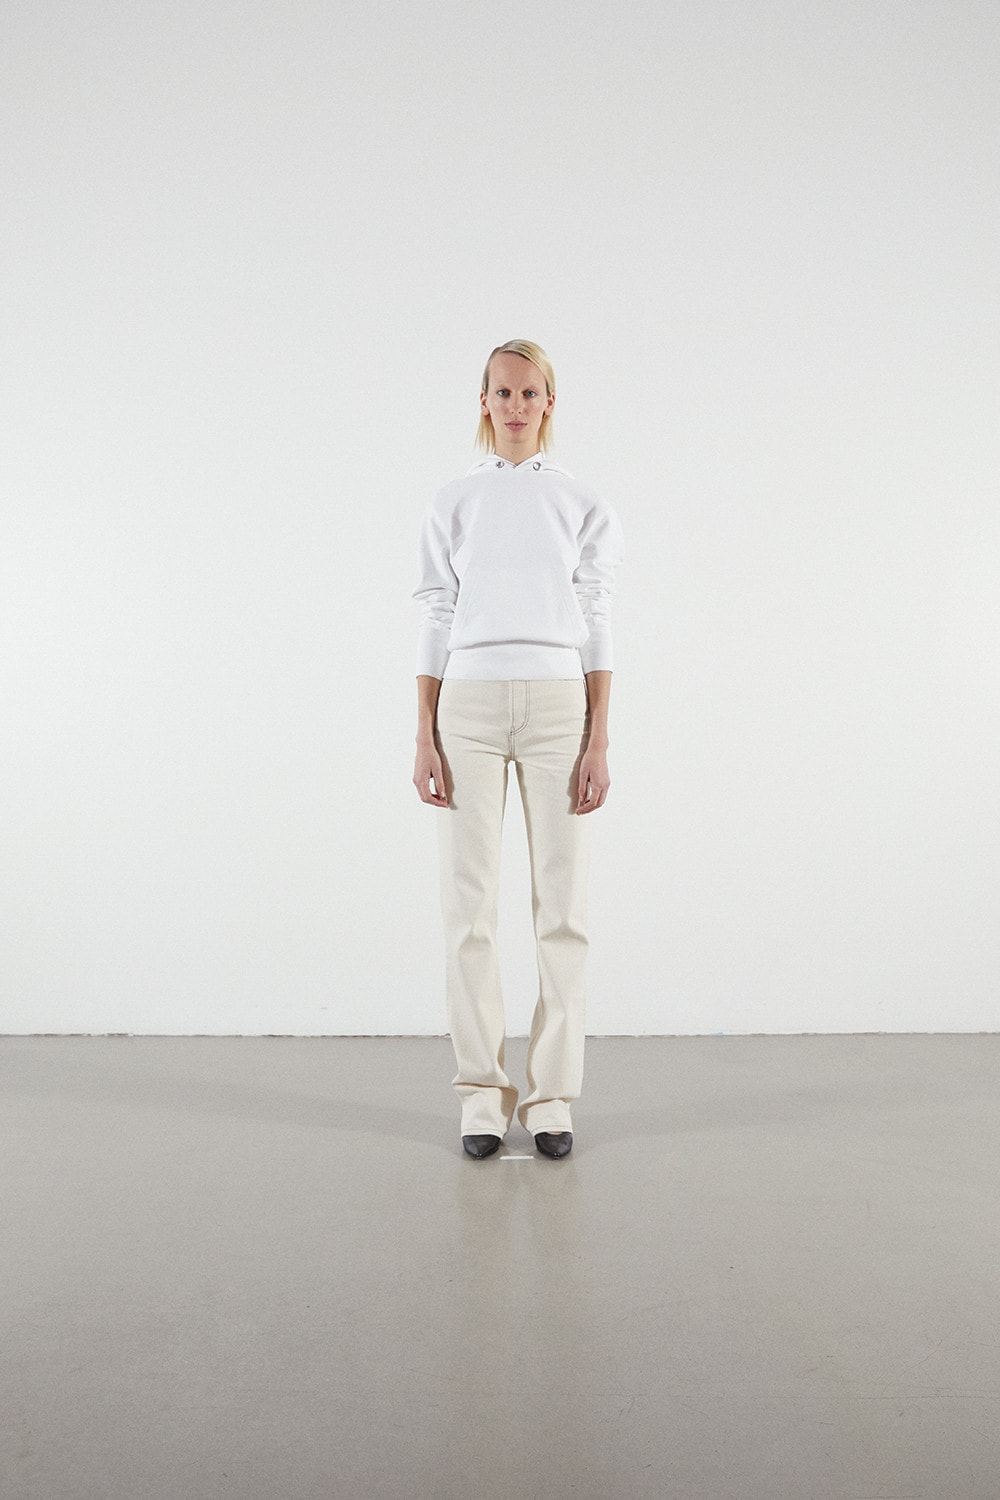 Helmut Lang Jeans Under Construction Capsule Lookbook Hoodie White Denim Cream